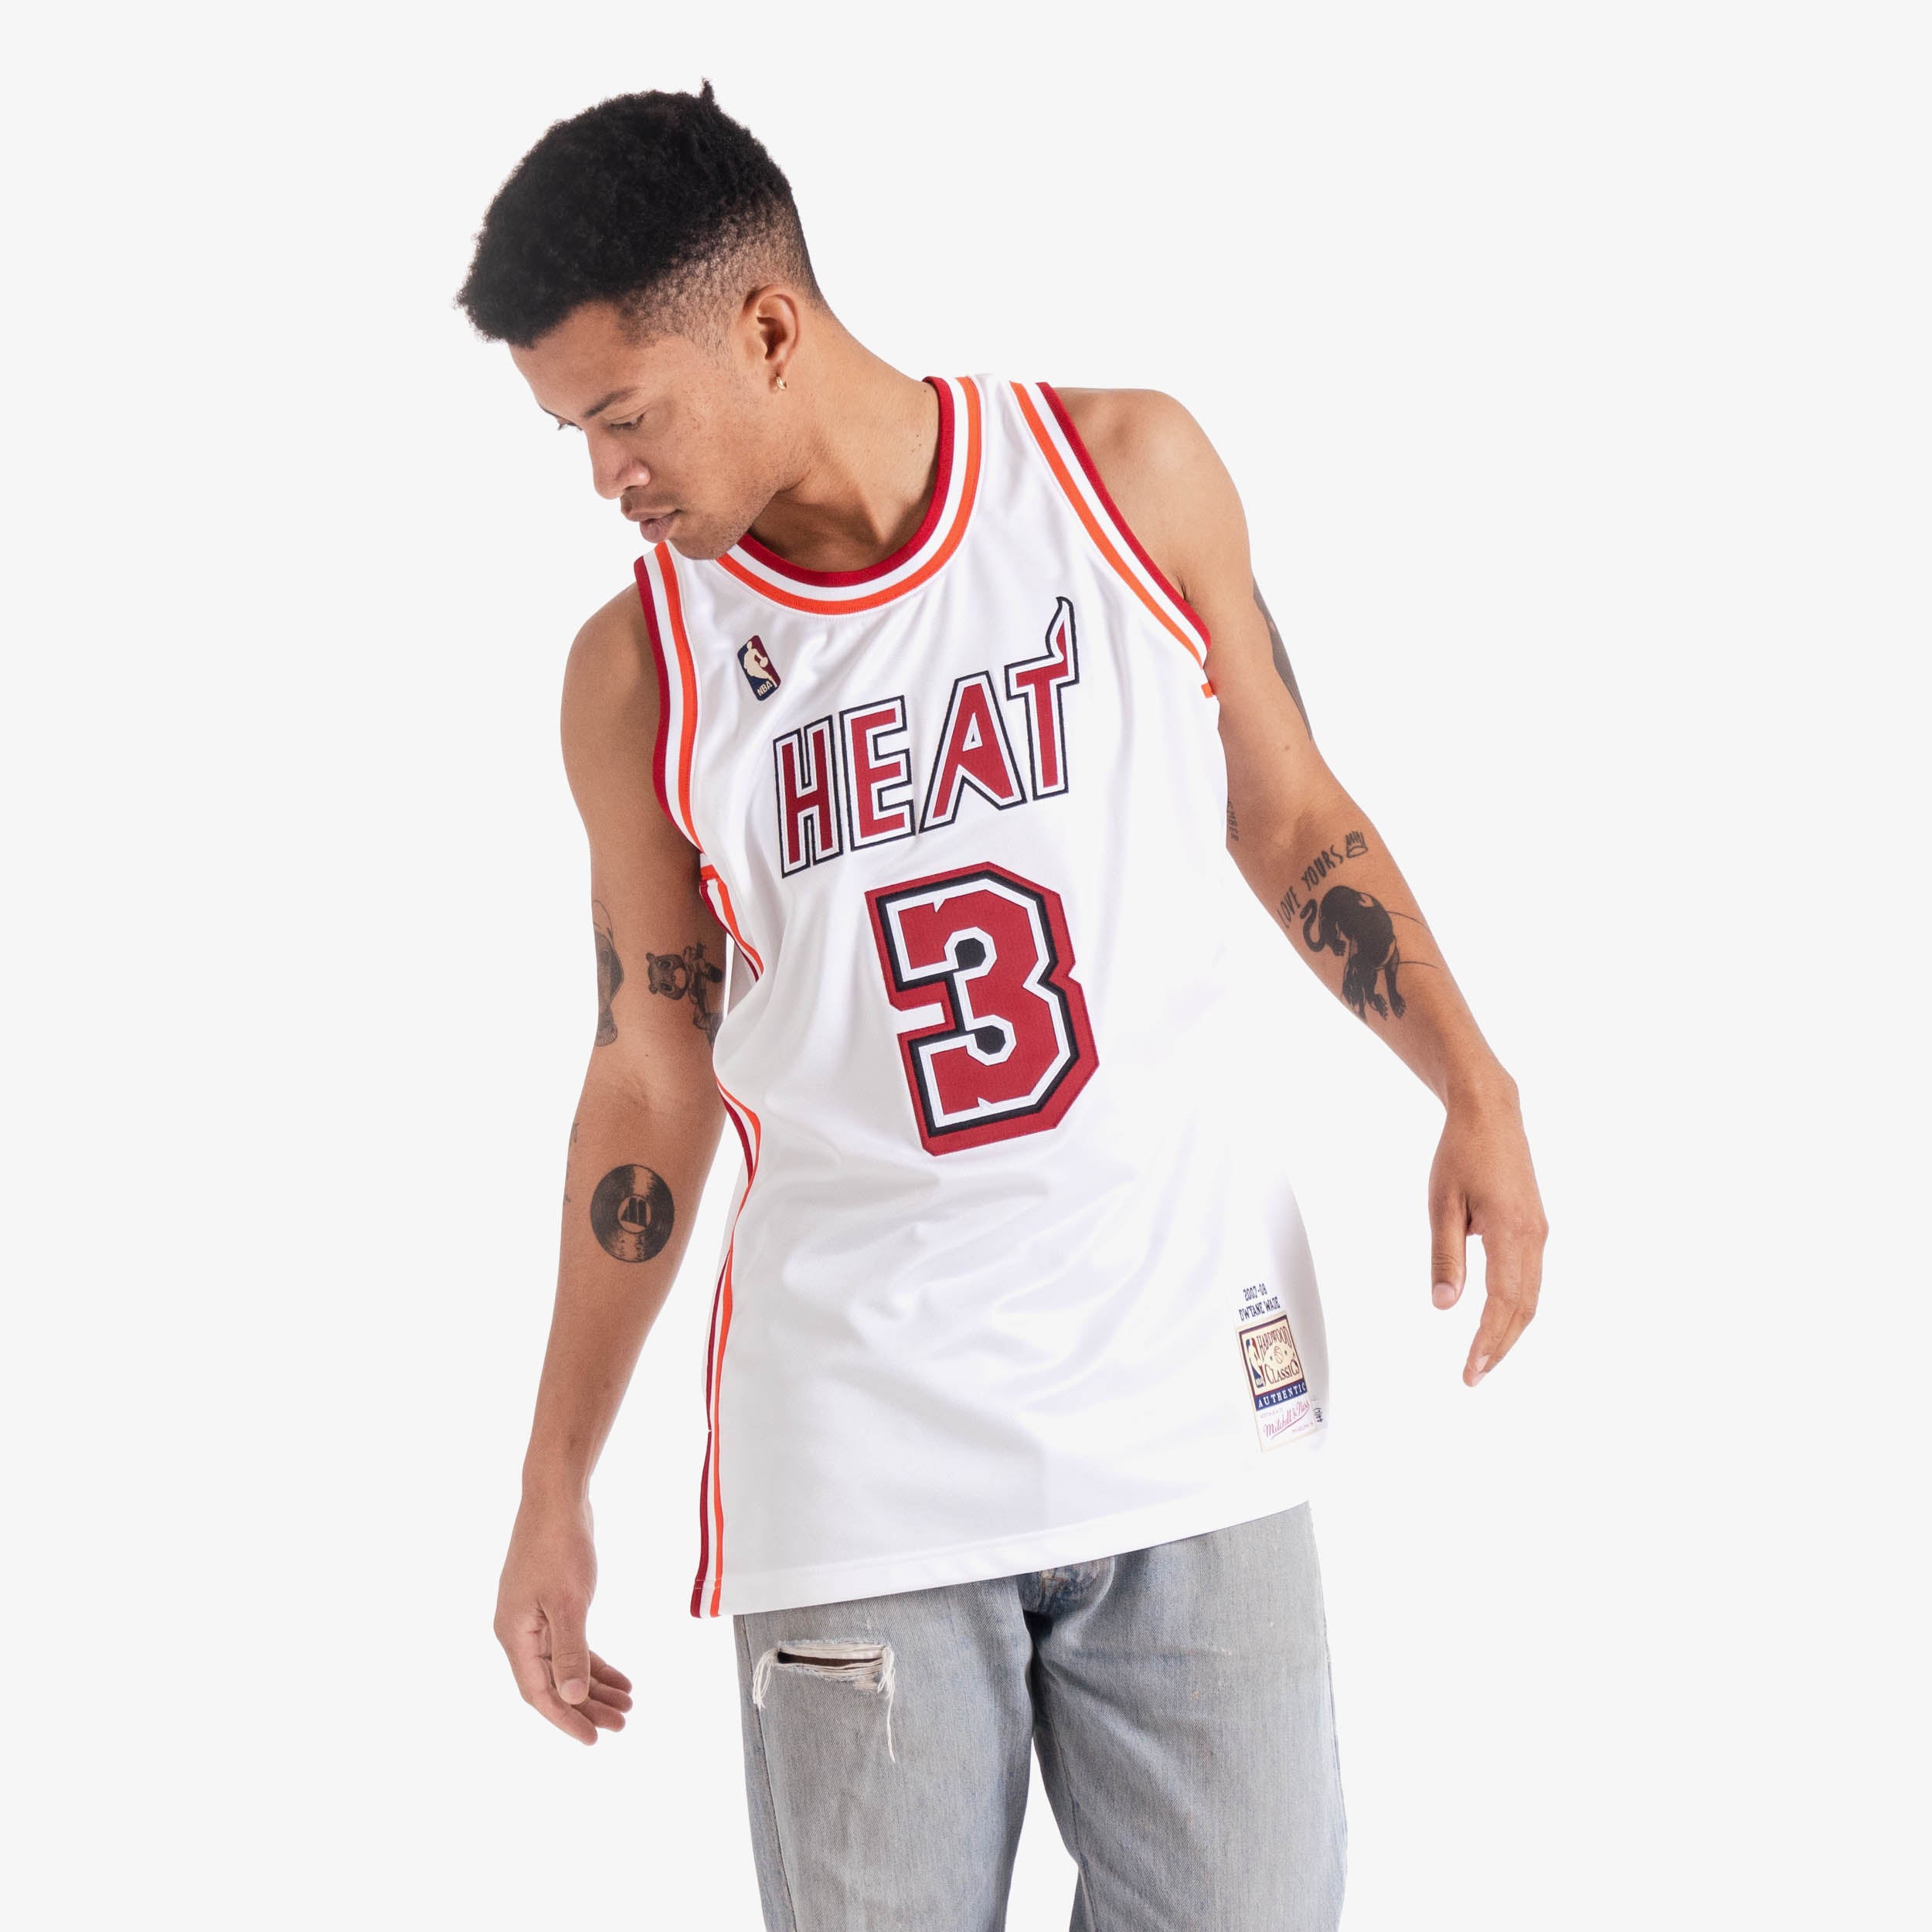 VTG Adidas Miami Heat Dwayne Wade Jersey L 14-16 Kids / Youth / Boys NBA